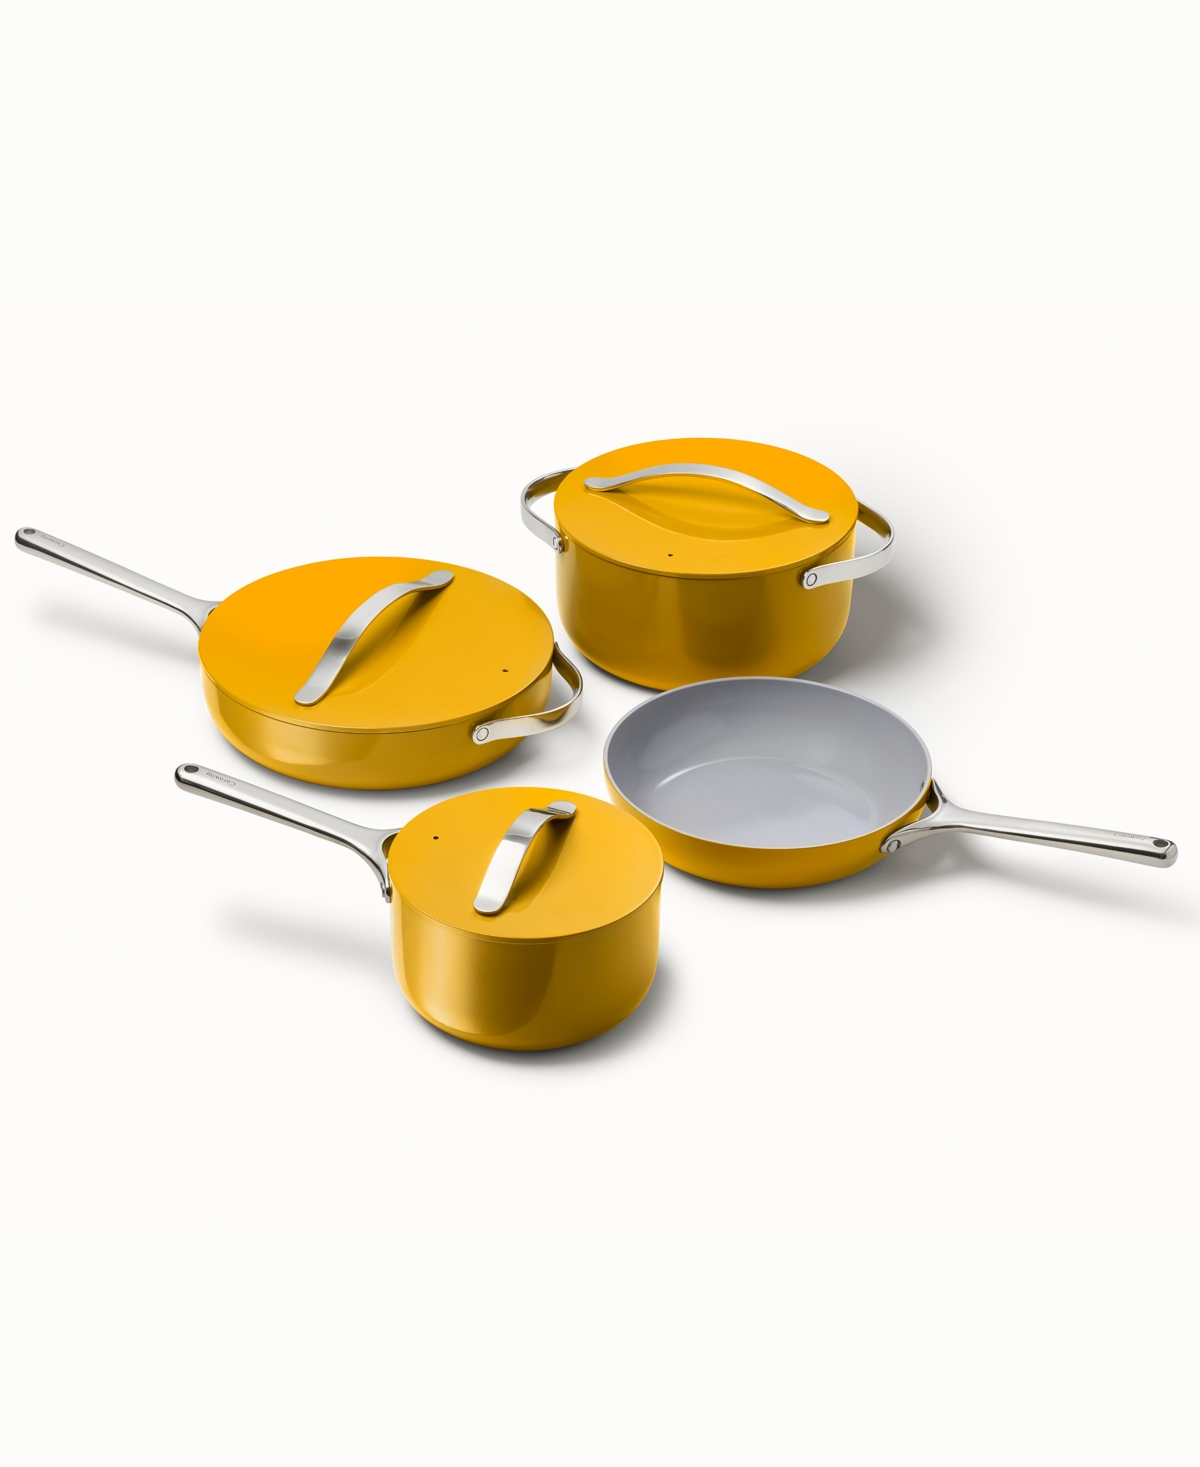 Caraway Aluminum Non-toxic Ceramic Non-stick 6 Piece Cookware Set In Marigold